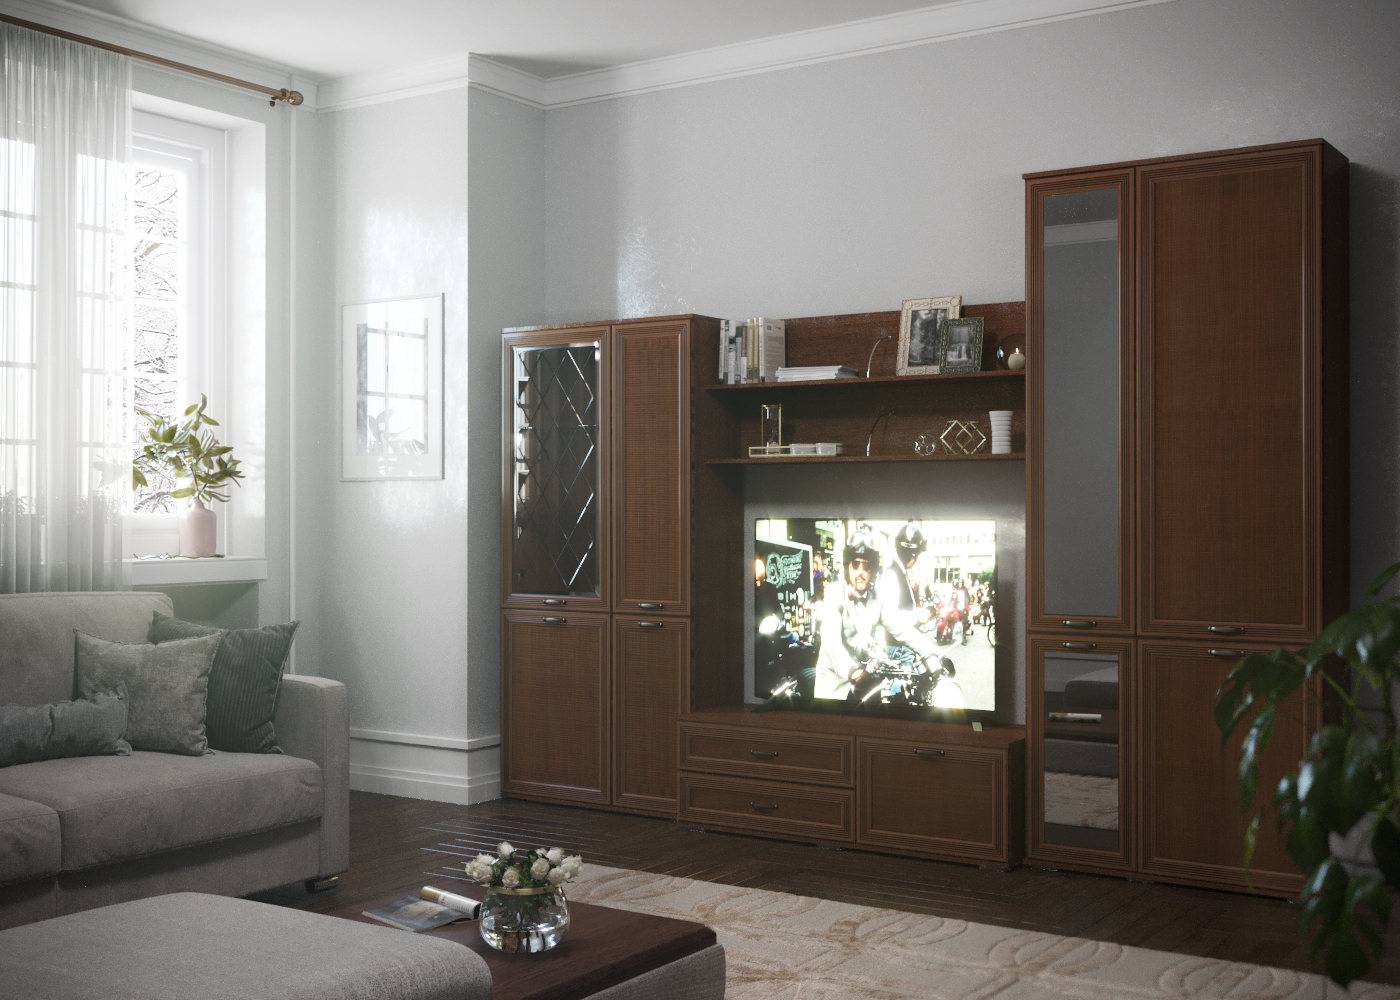 Furniture design for living room in 3d max corona render image